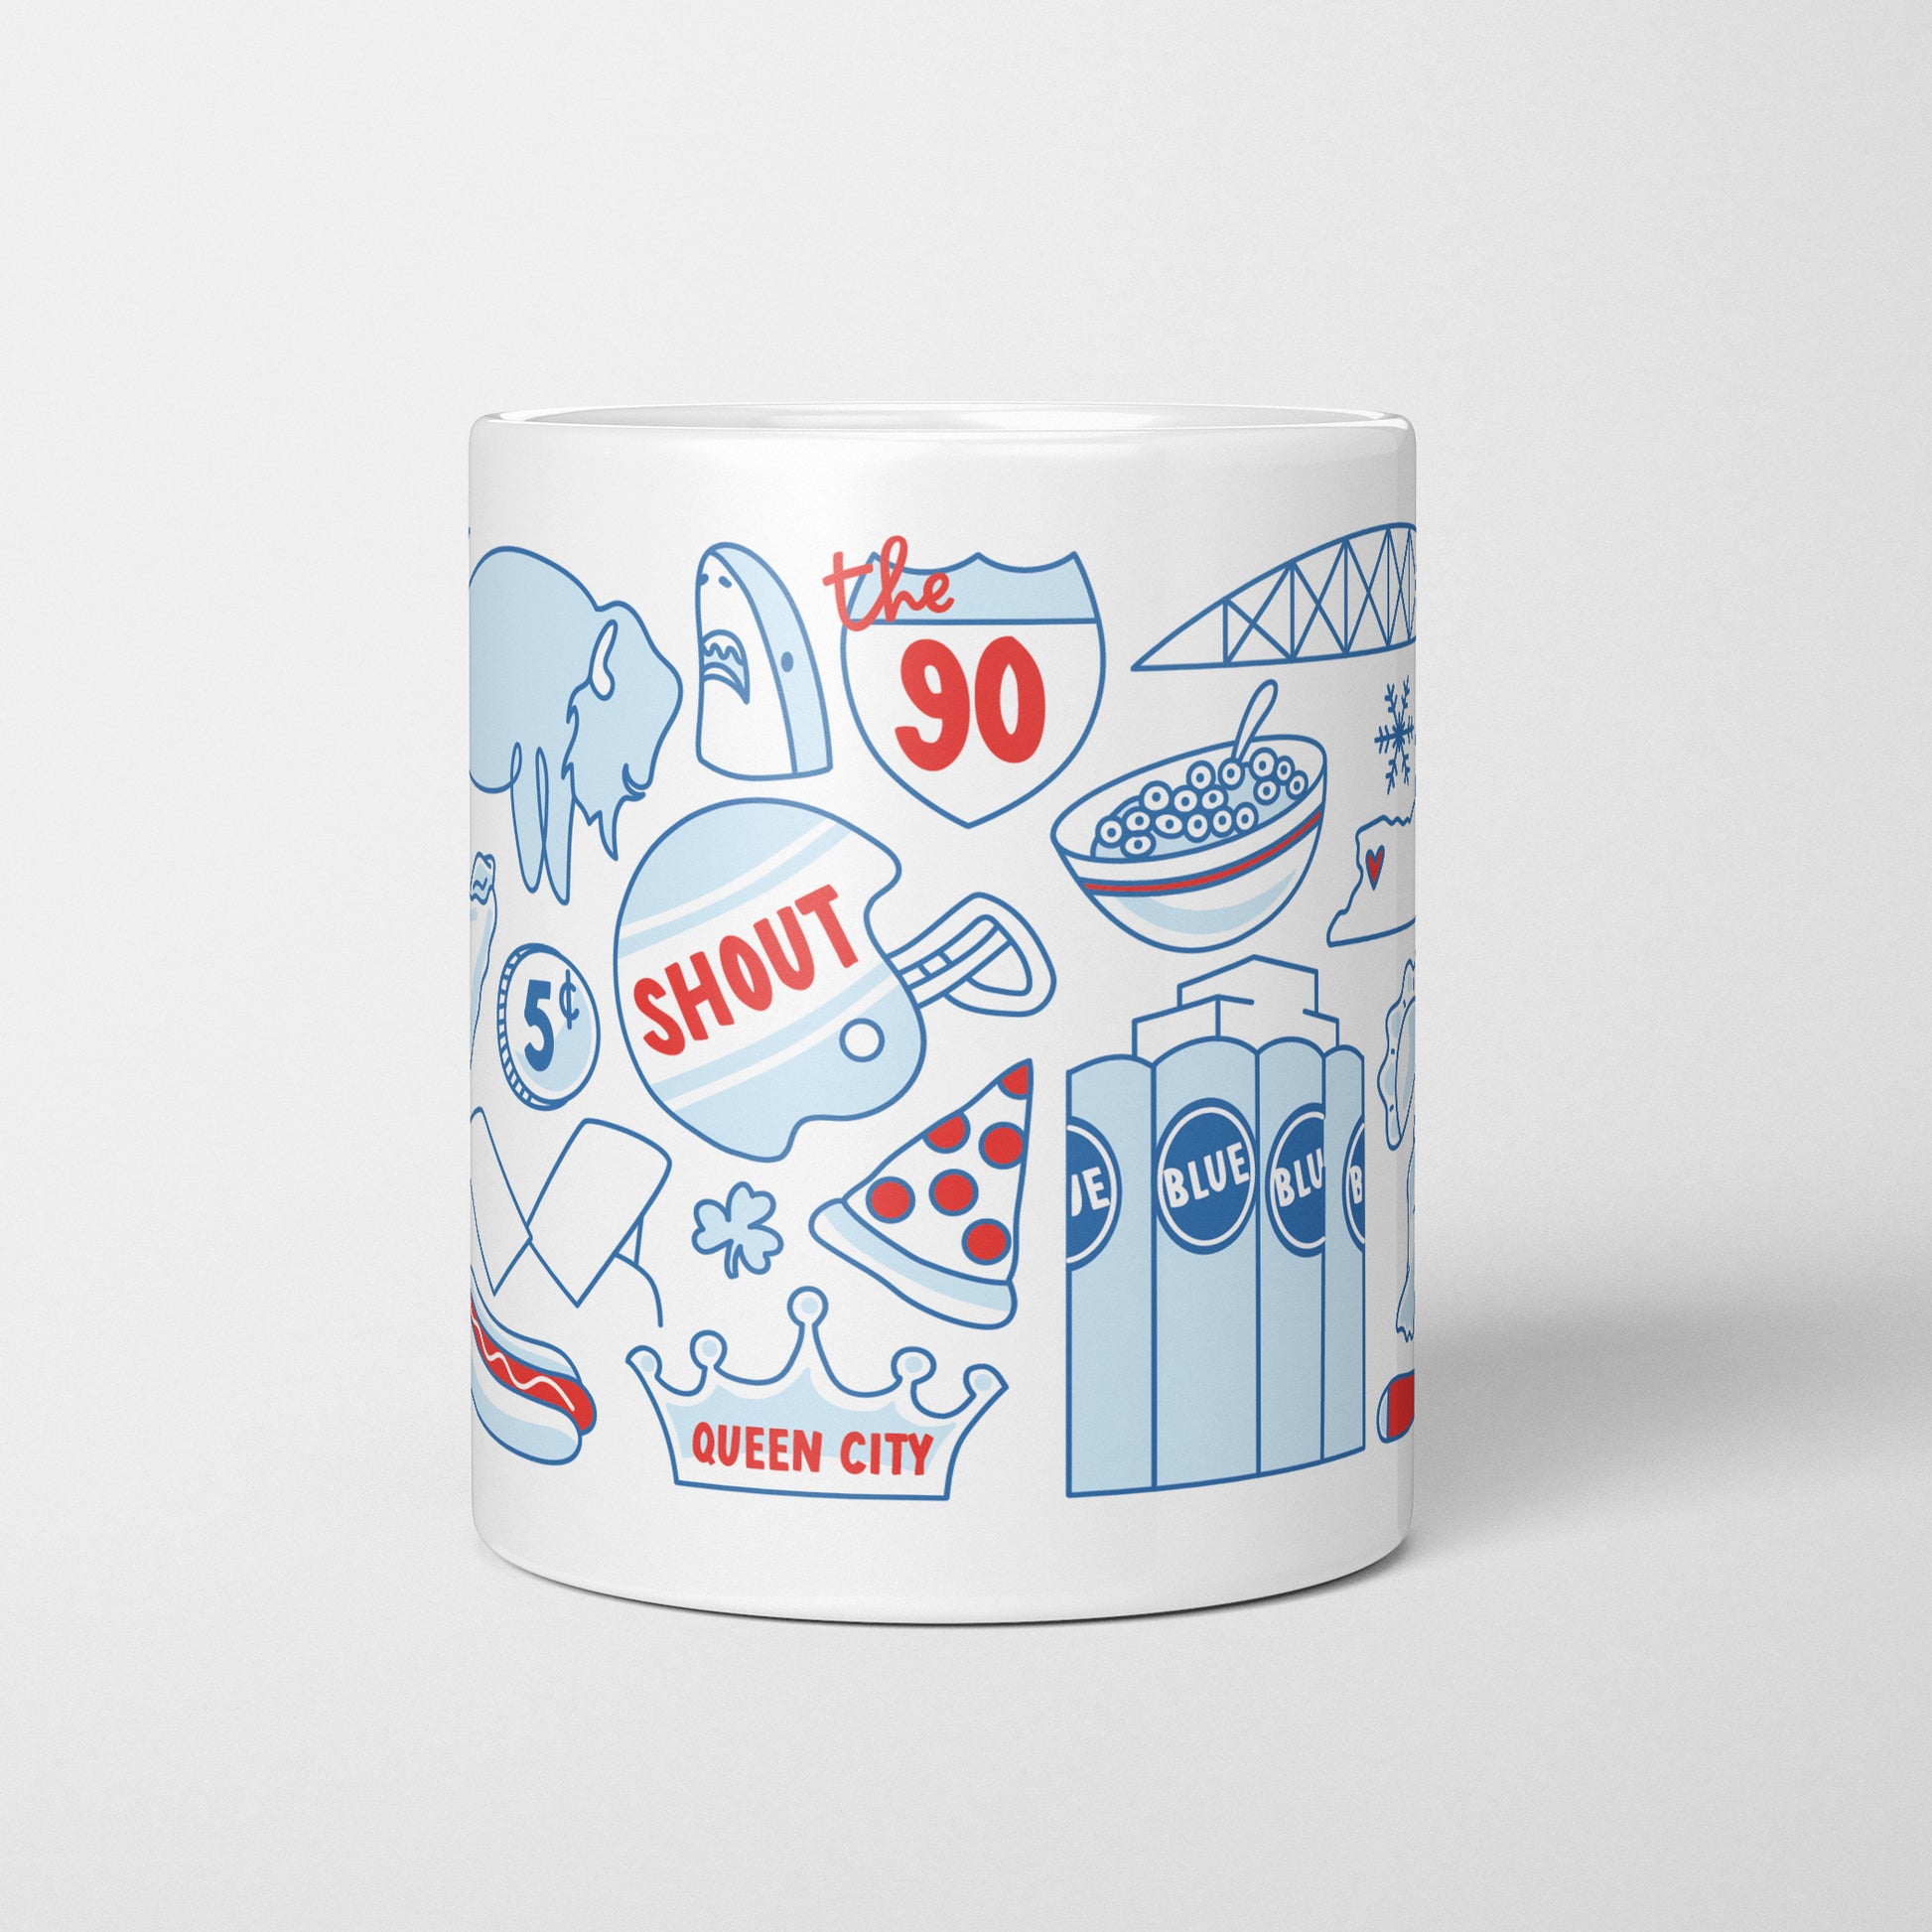 Majestic Buffalo gift-boxed mug